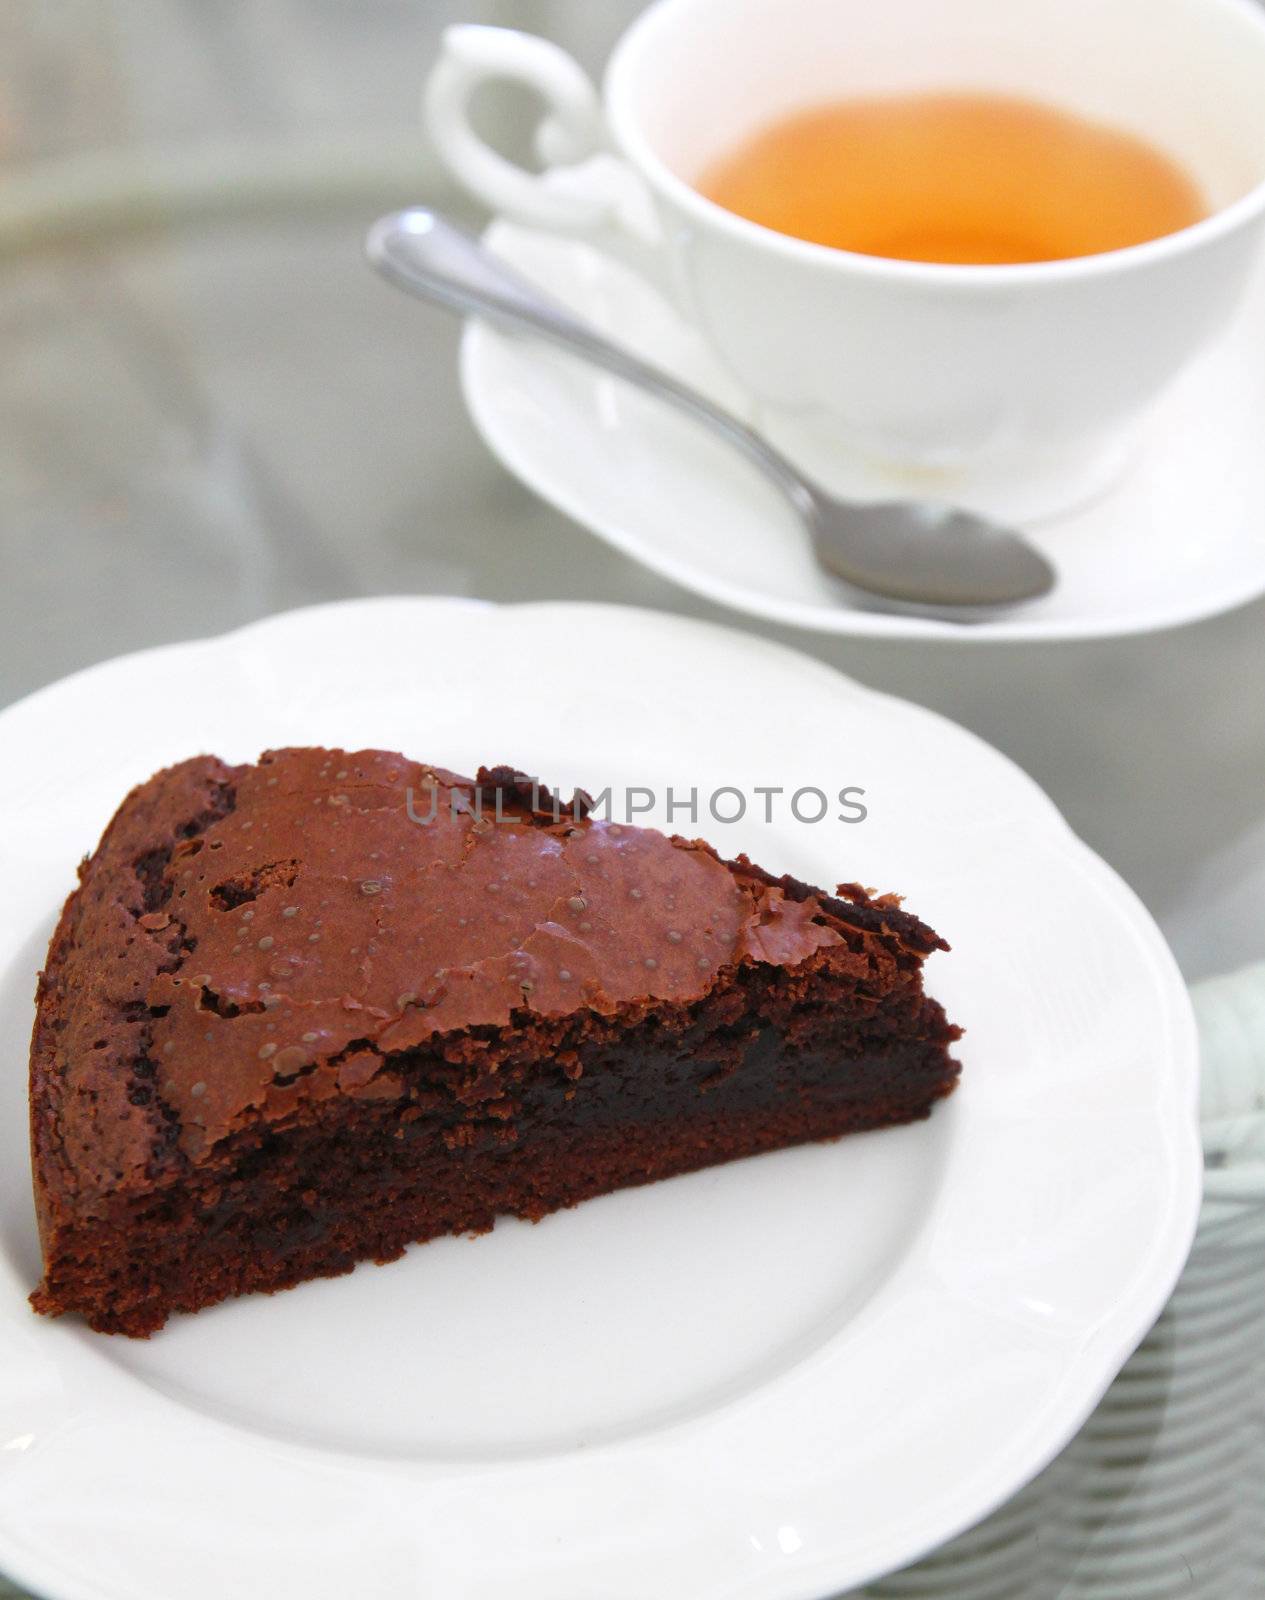 Sweet brownie with hot tea 